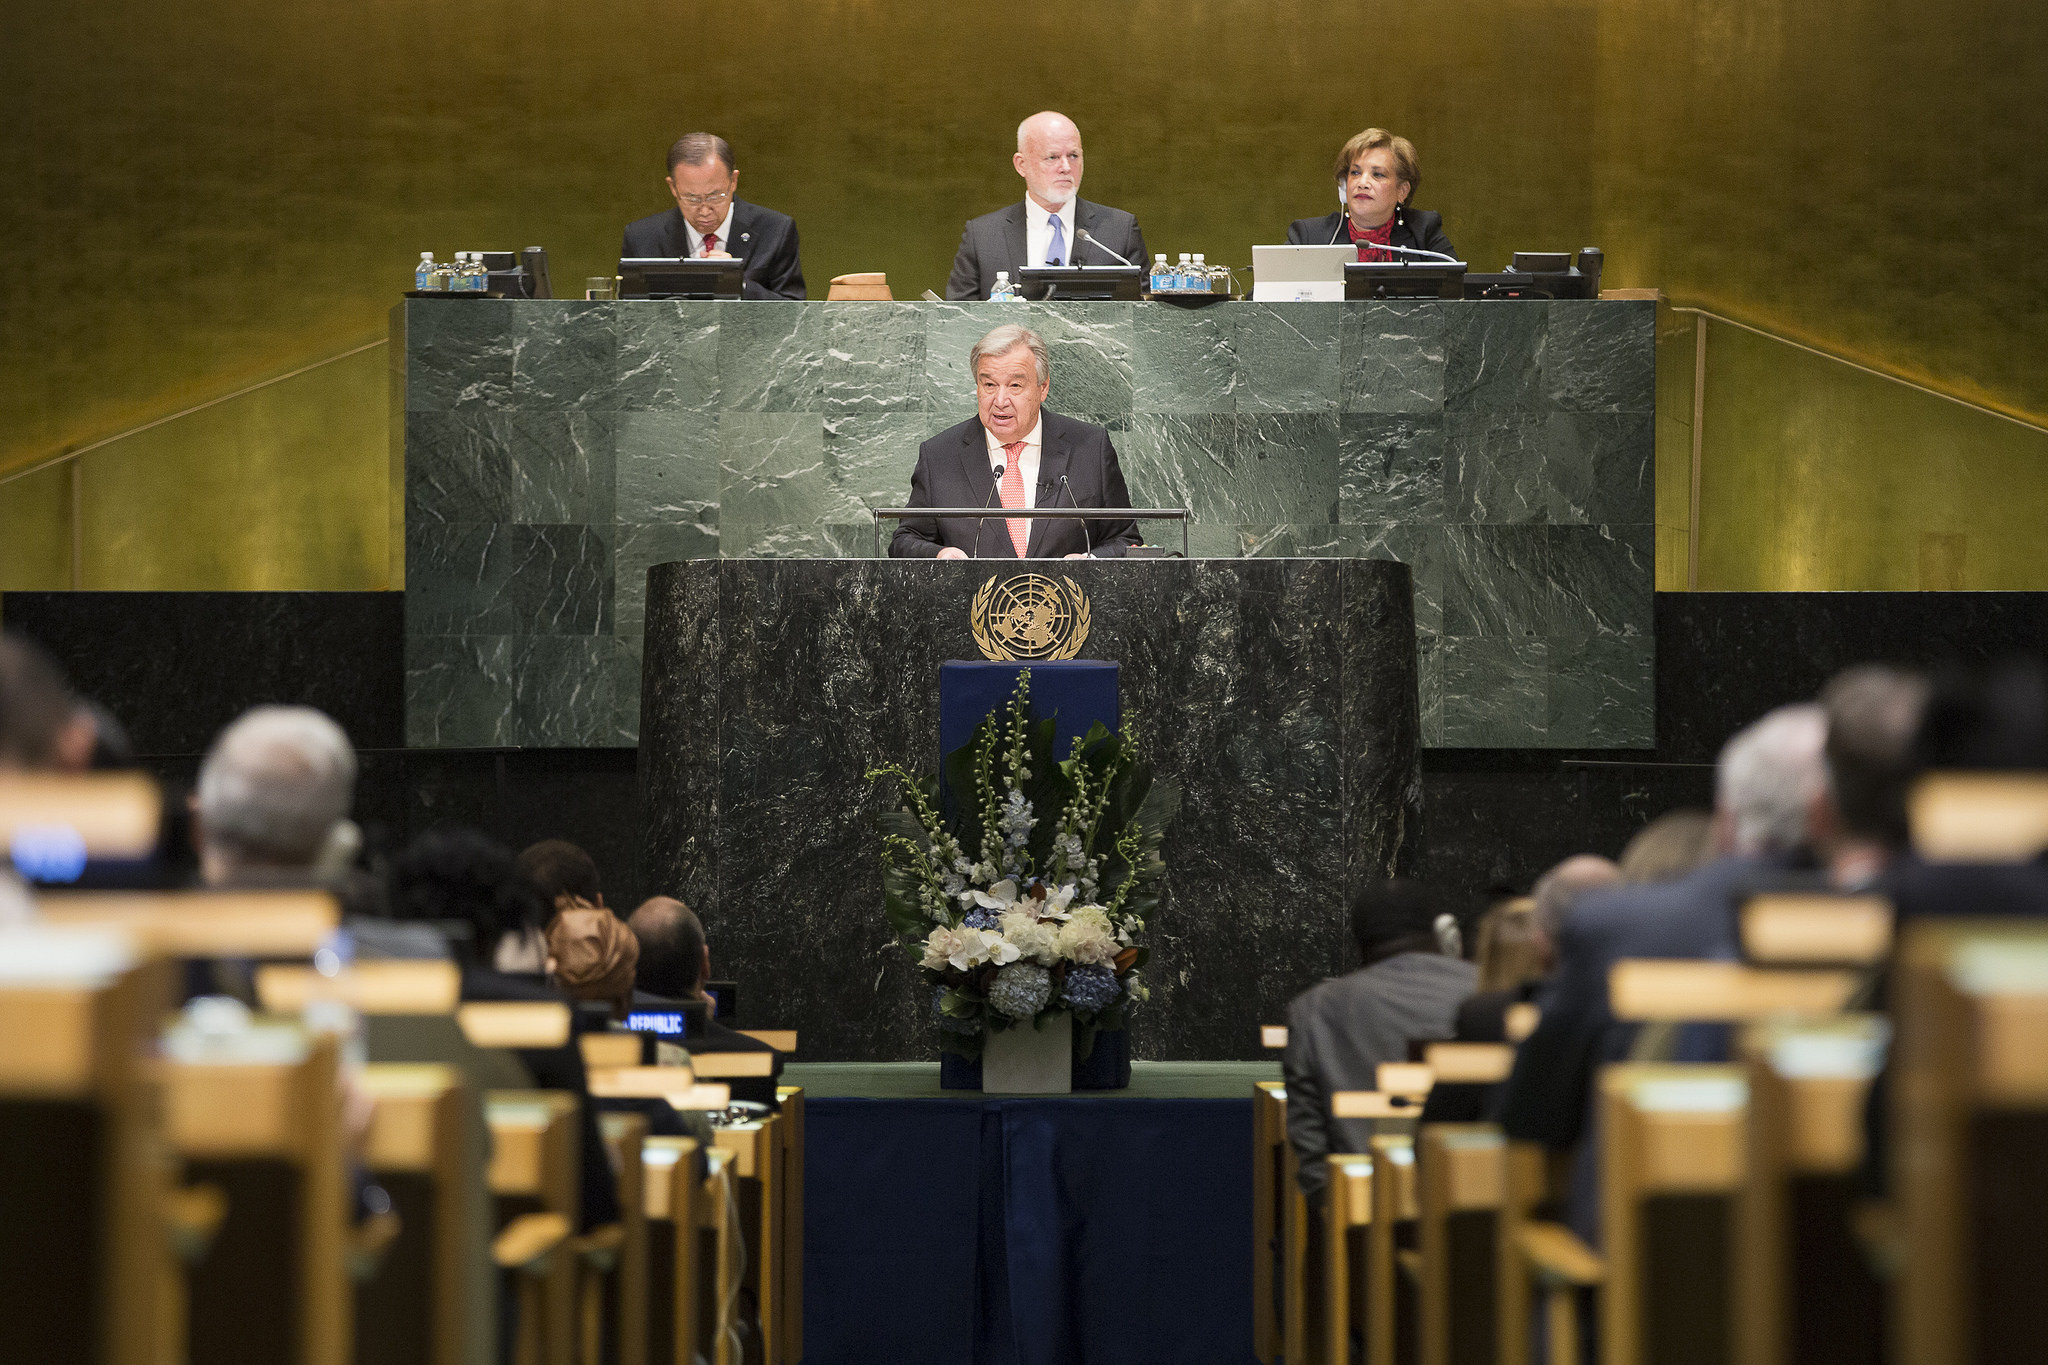 Generalni sekretar UN-a Antonio Guteres drži govor tokom sednice Generalne skupštine, decembar 2016. (Foto: UN/Manuel Elias)